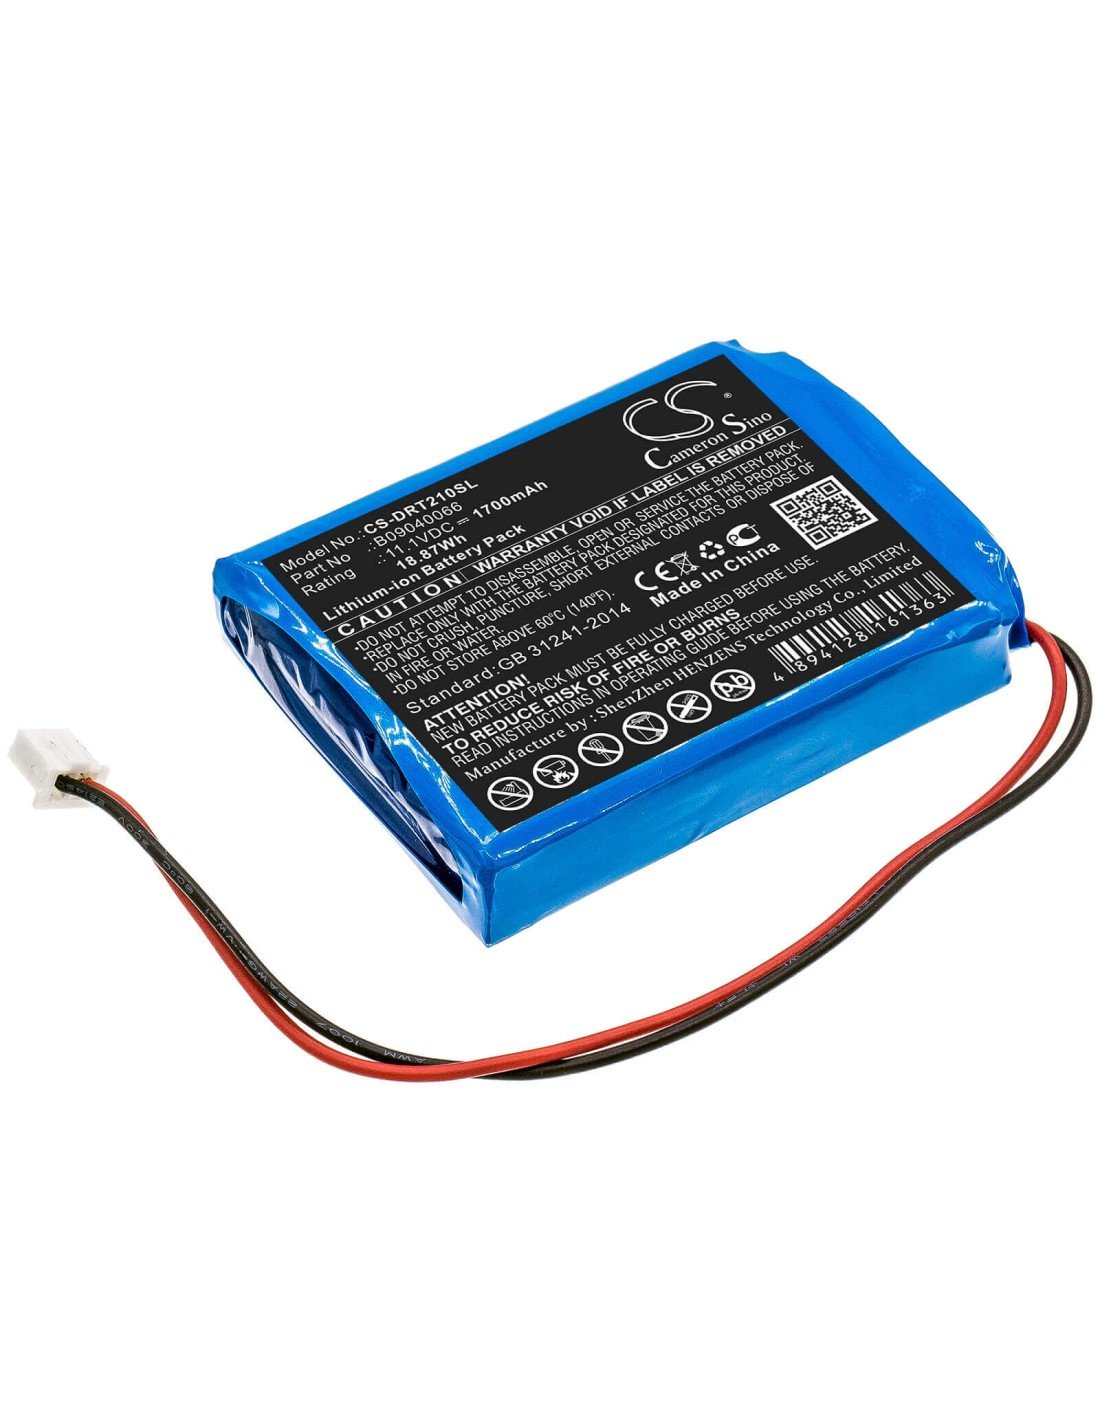 Battery for Deviser, Ds2100a, Ds2100b, Ds2100q 11.1V, 1700mAh - 18.87Wh